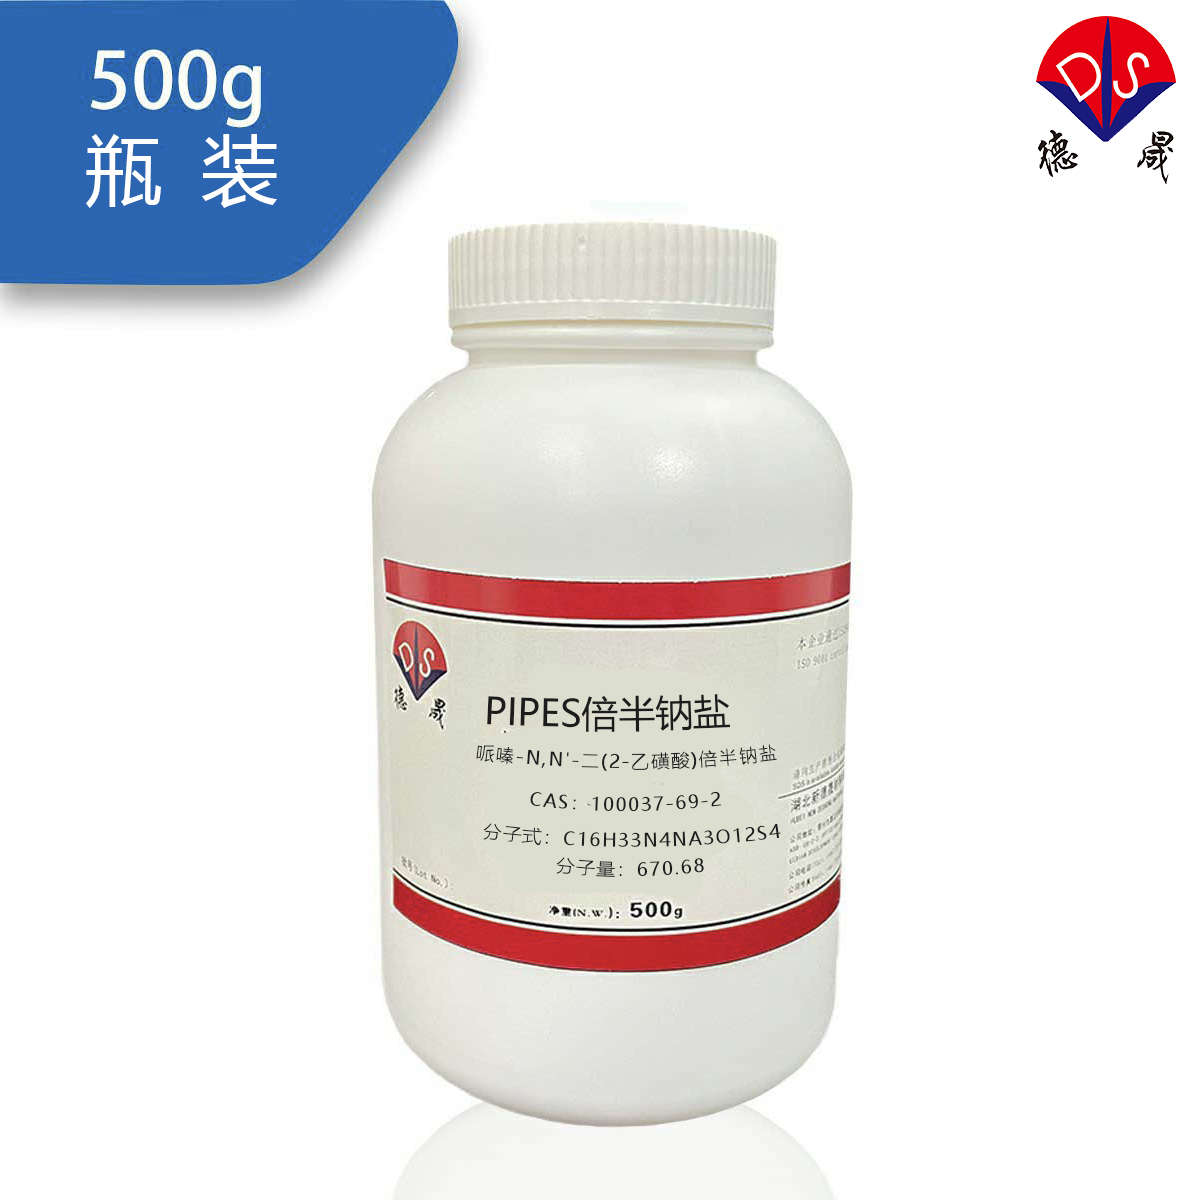 Piperazine-N, N '- bis (2-ethanesulfonic acid) sesquisodium salt (PIPES-1.5NA)